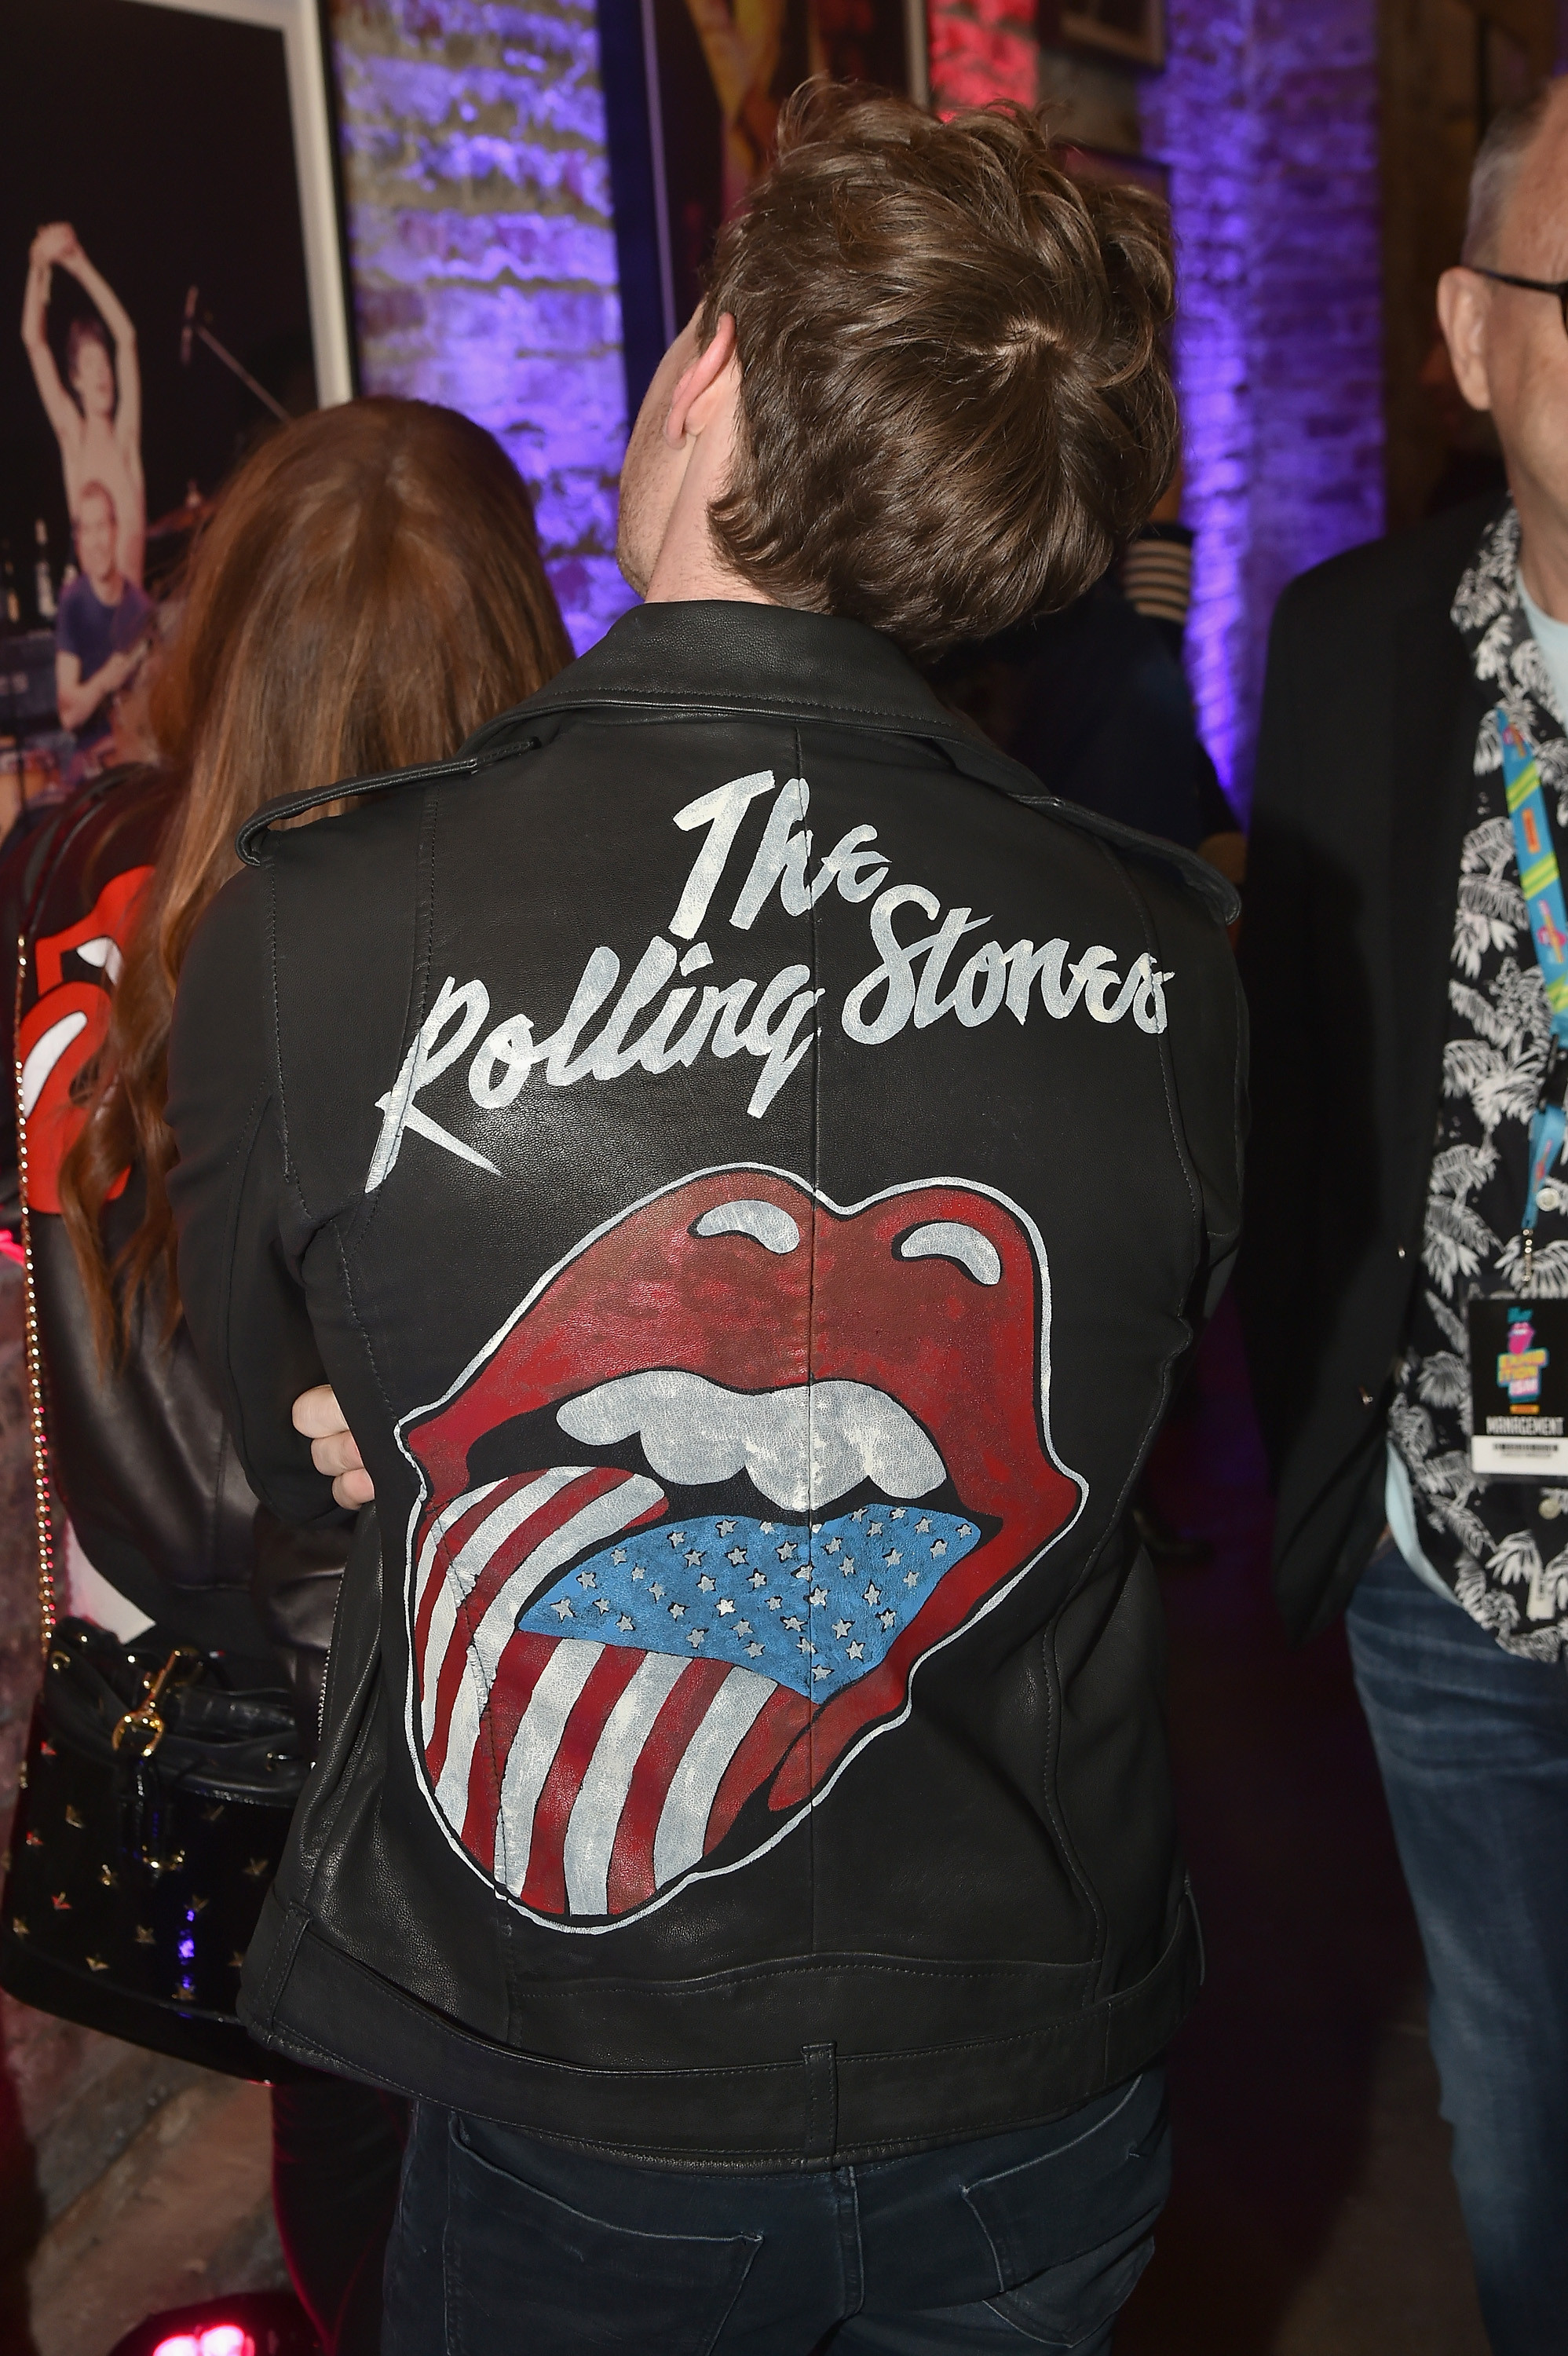 The Rolling stones.jpg